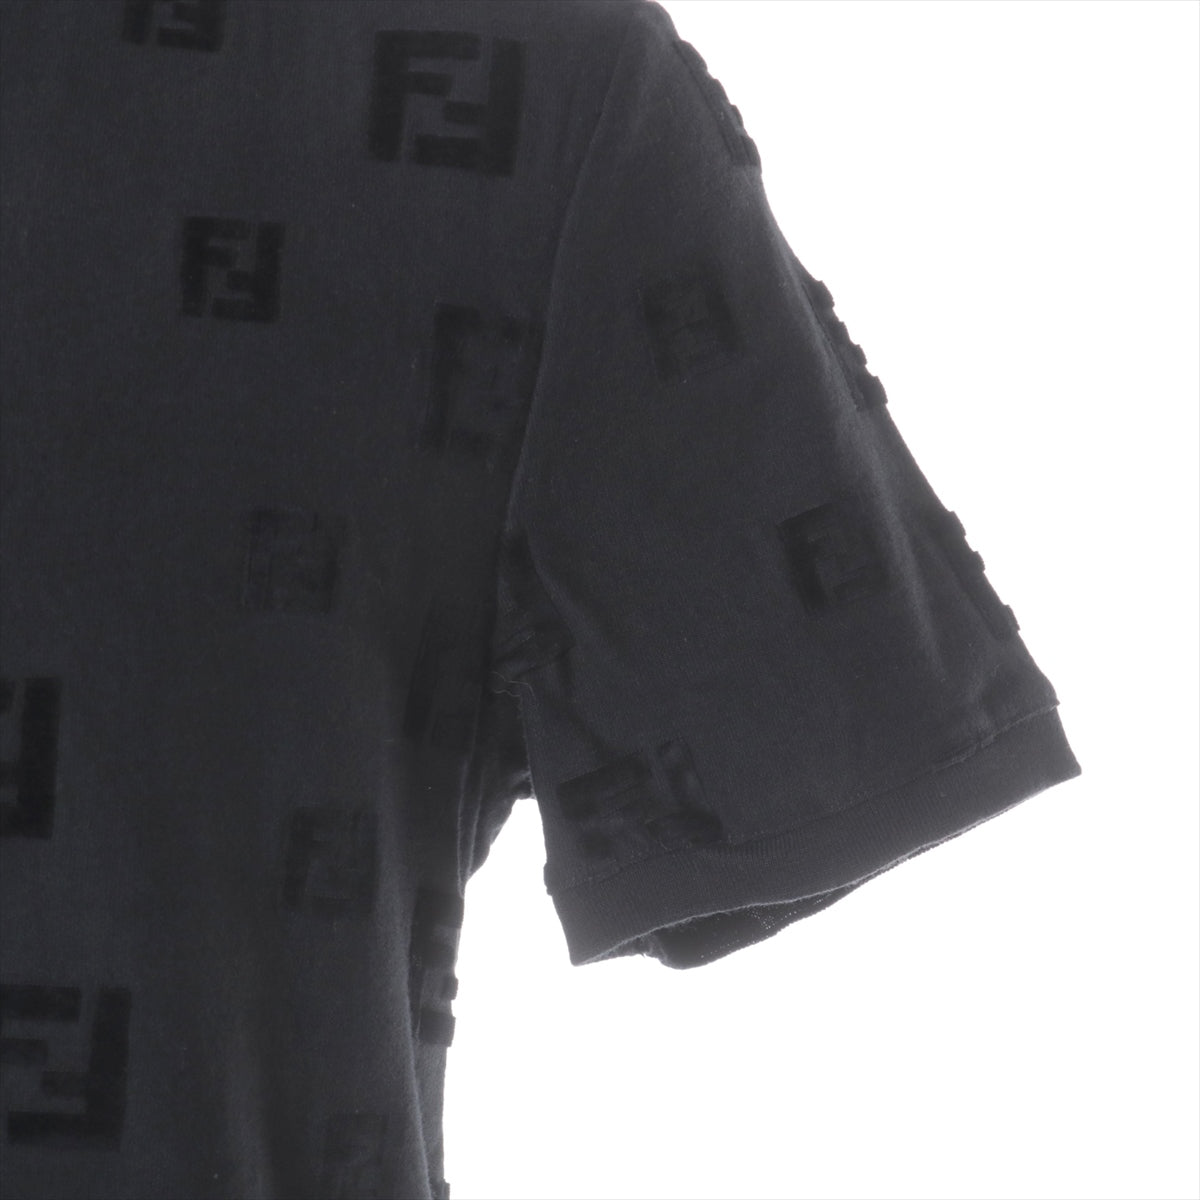 Fendi ZUCCa 20 years Cotton Cut and sew L Men's Black  FF total pattern FAF578